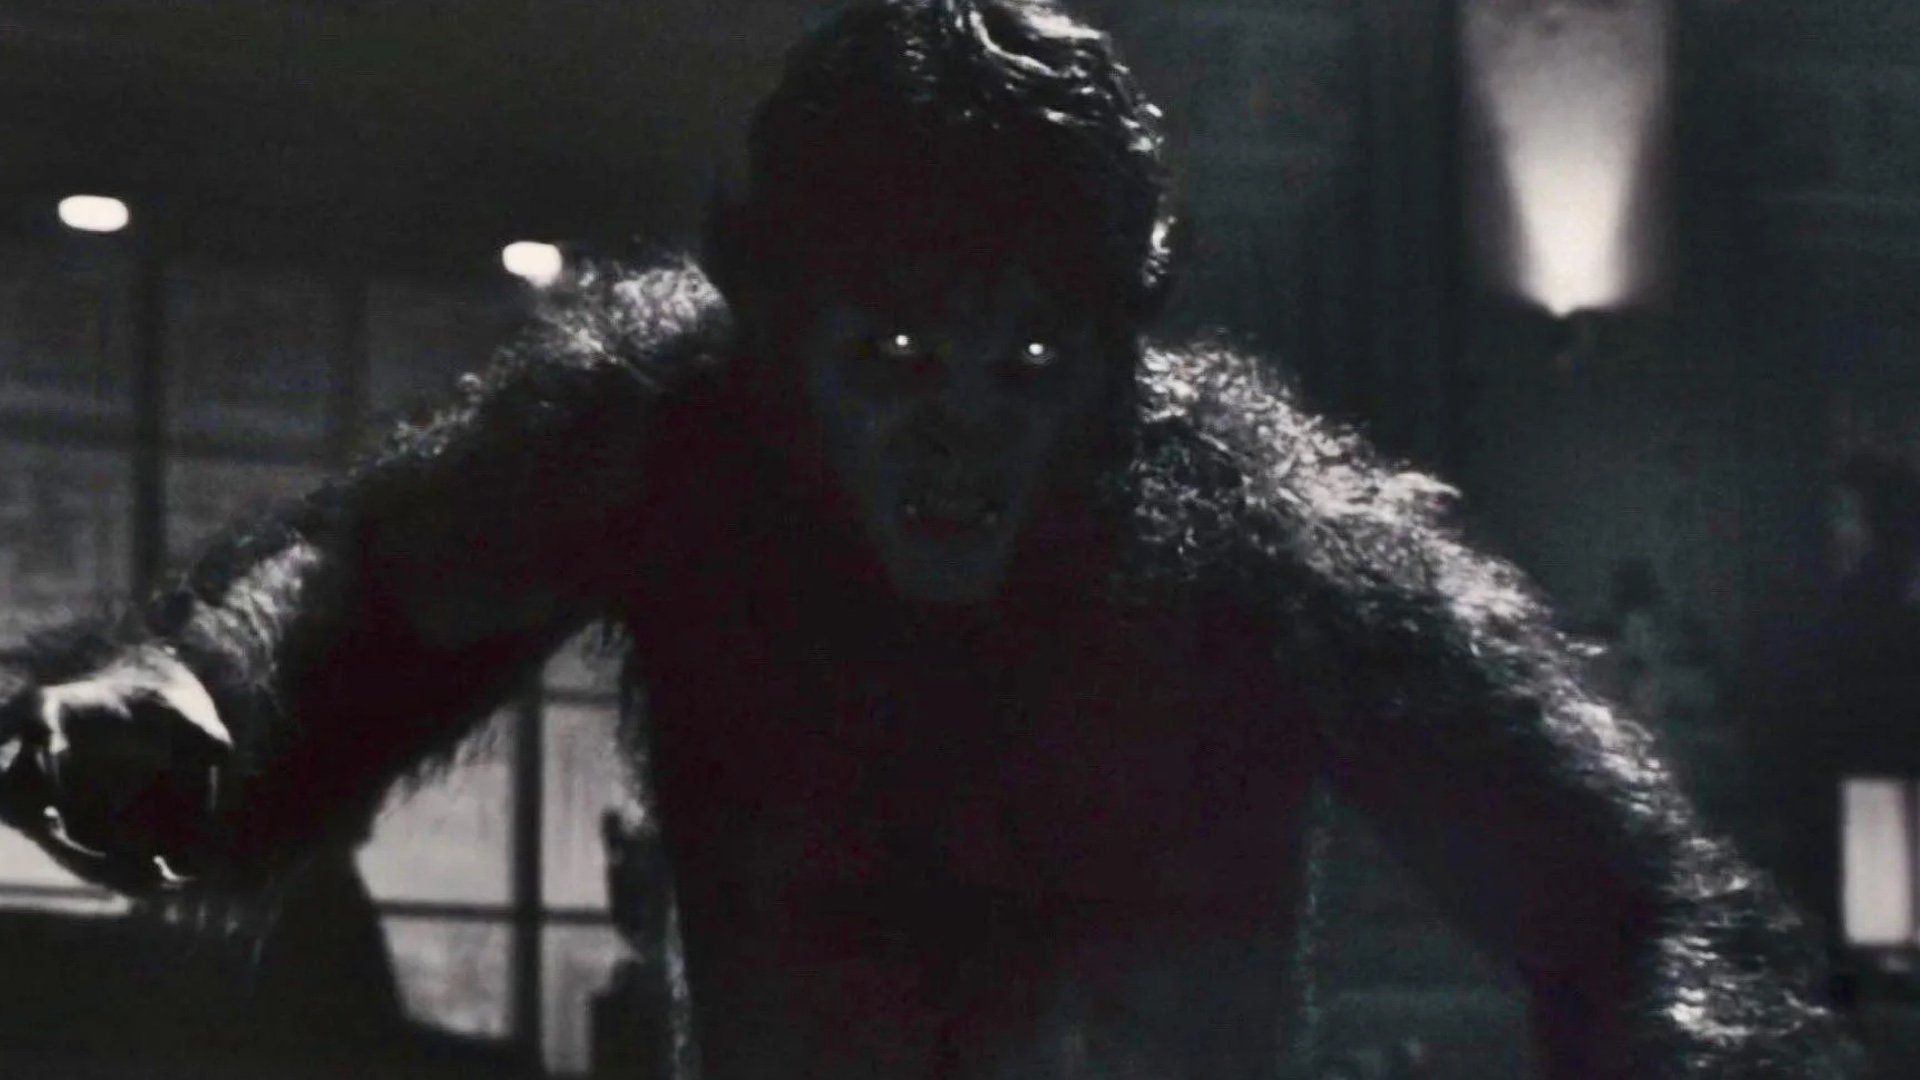 Marvel Studios' Werewolf By Night - Official Trailer